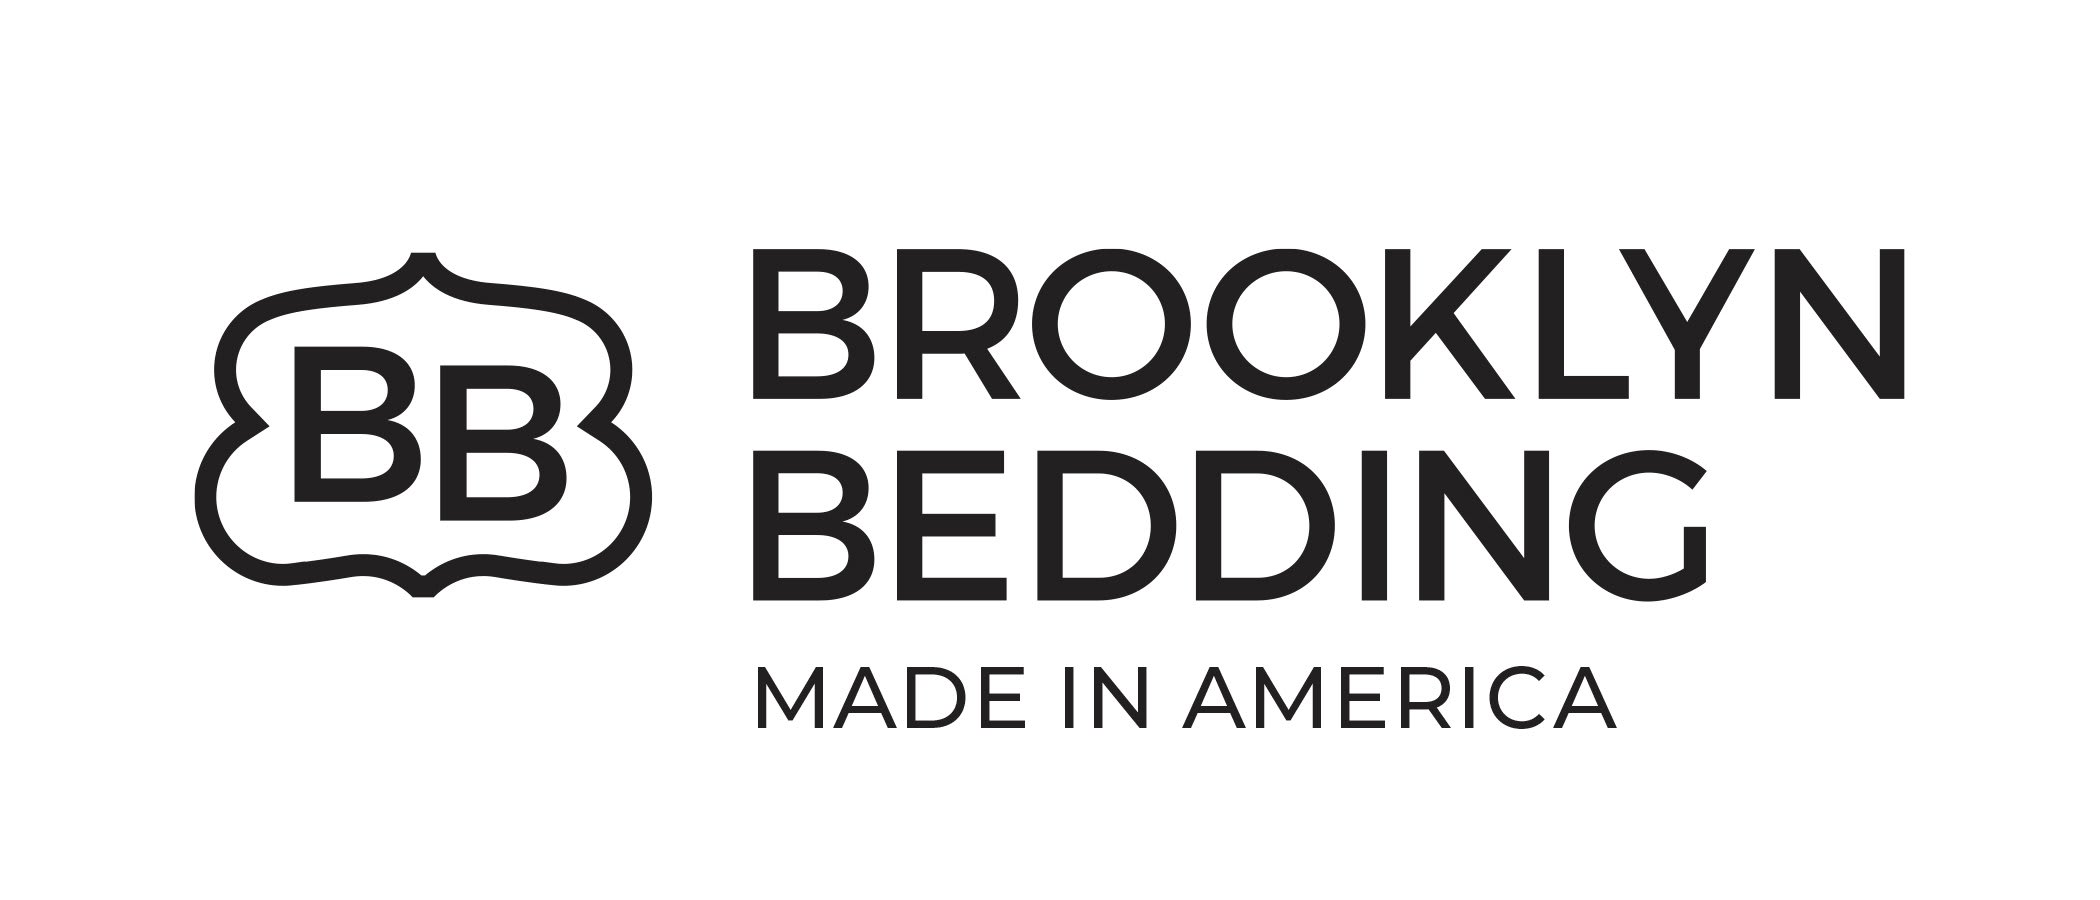 Brooklyn Bedding Logo - Made in America, left aligned